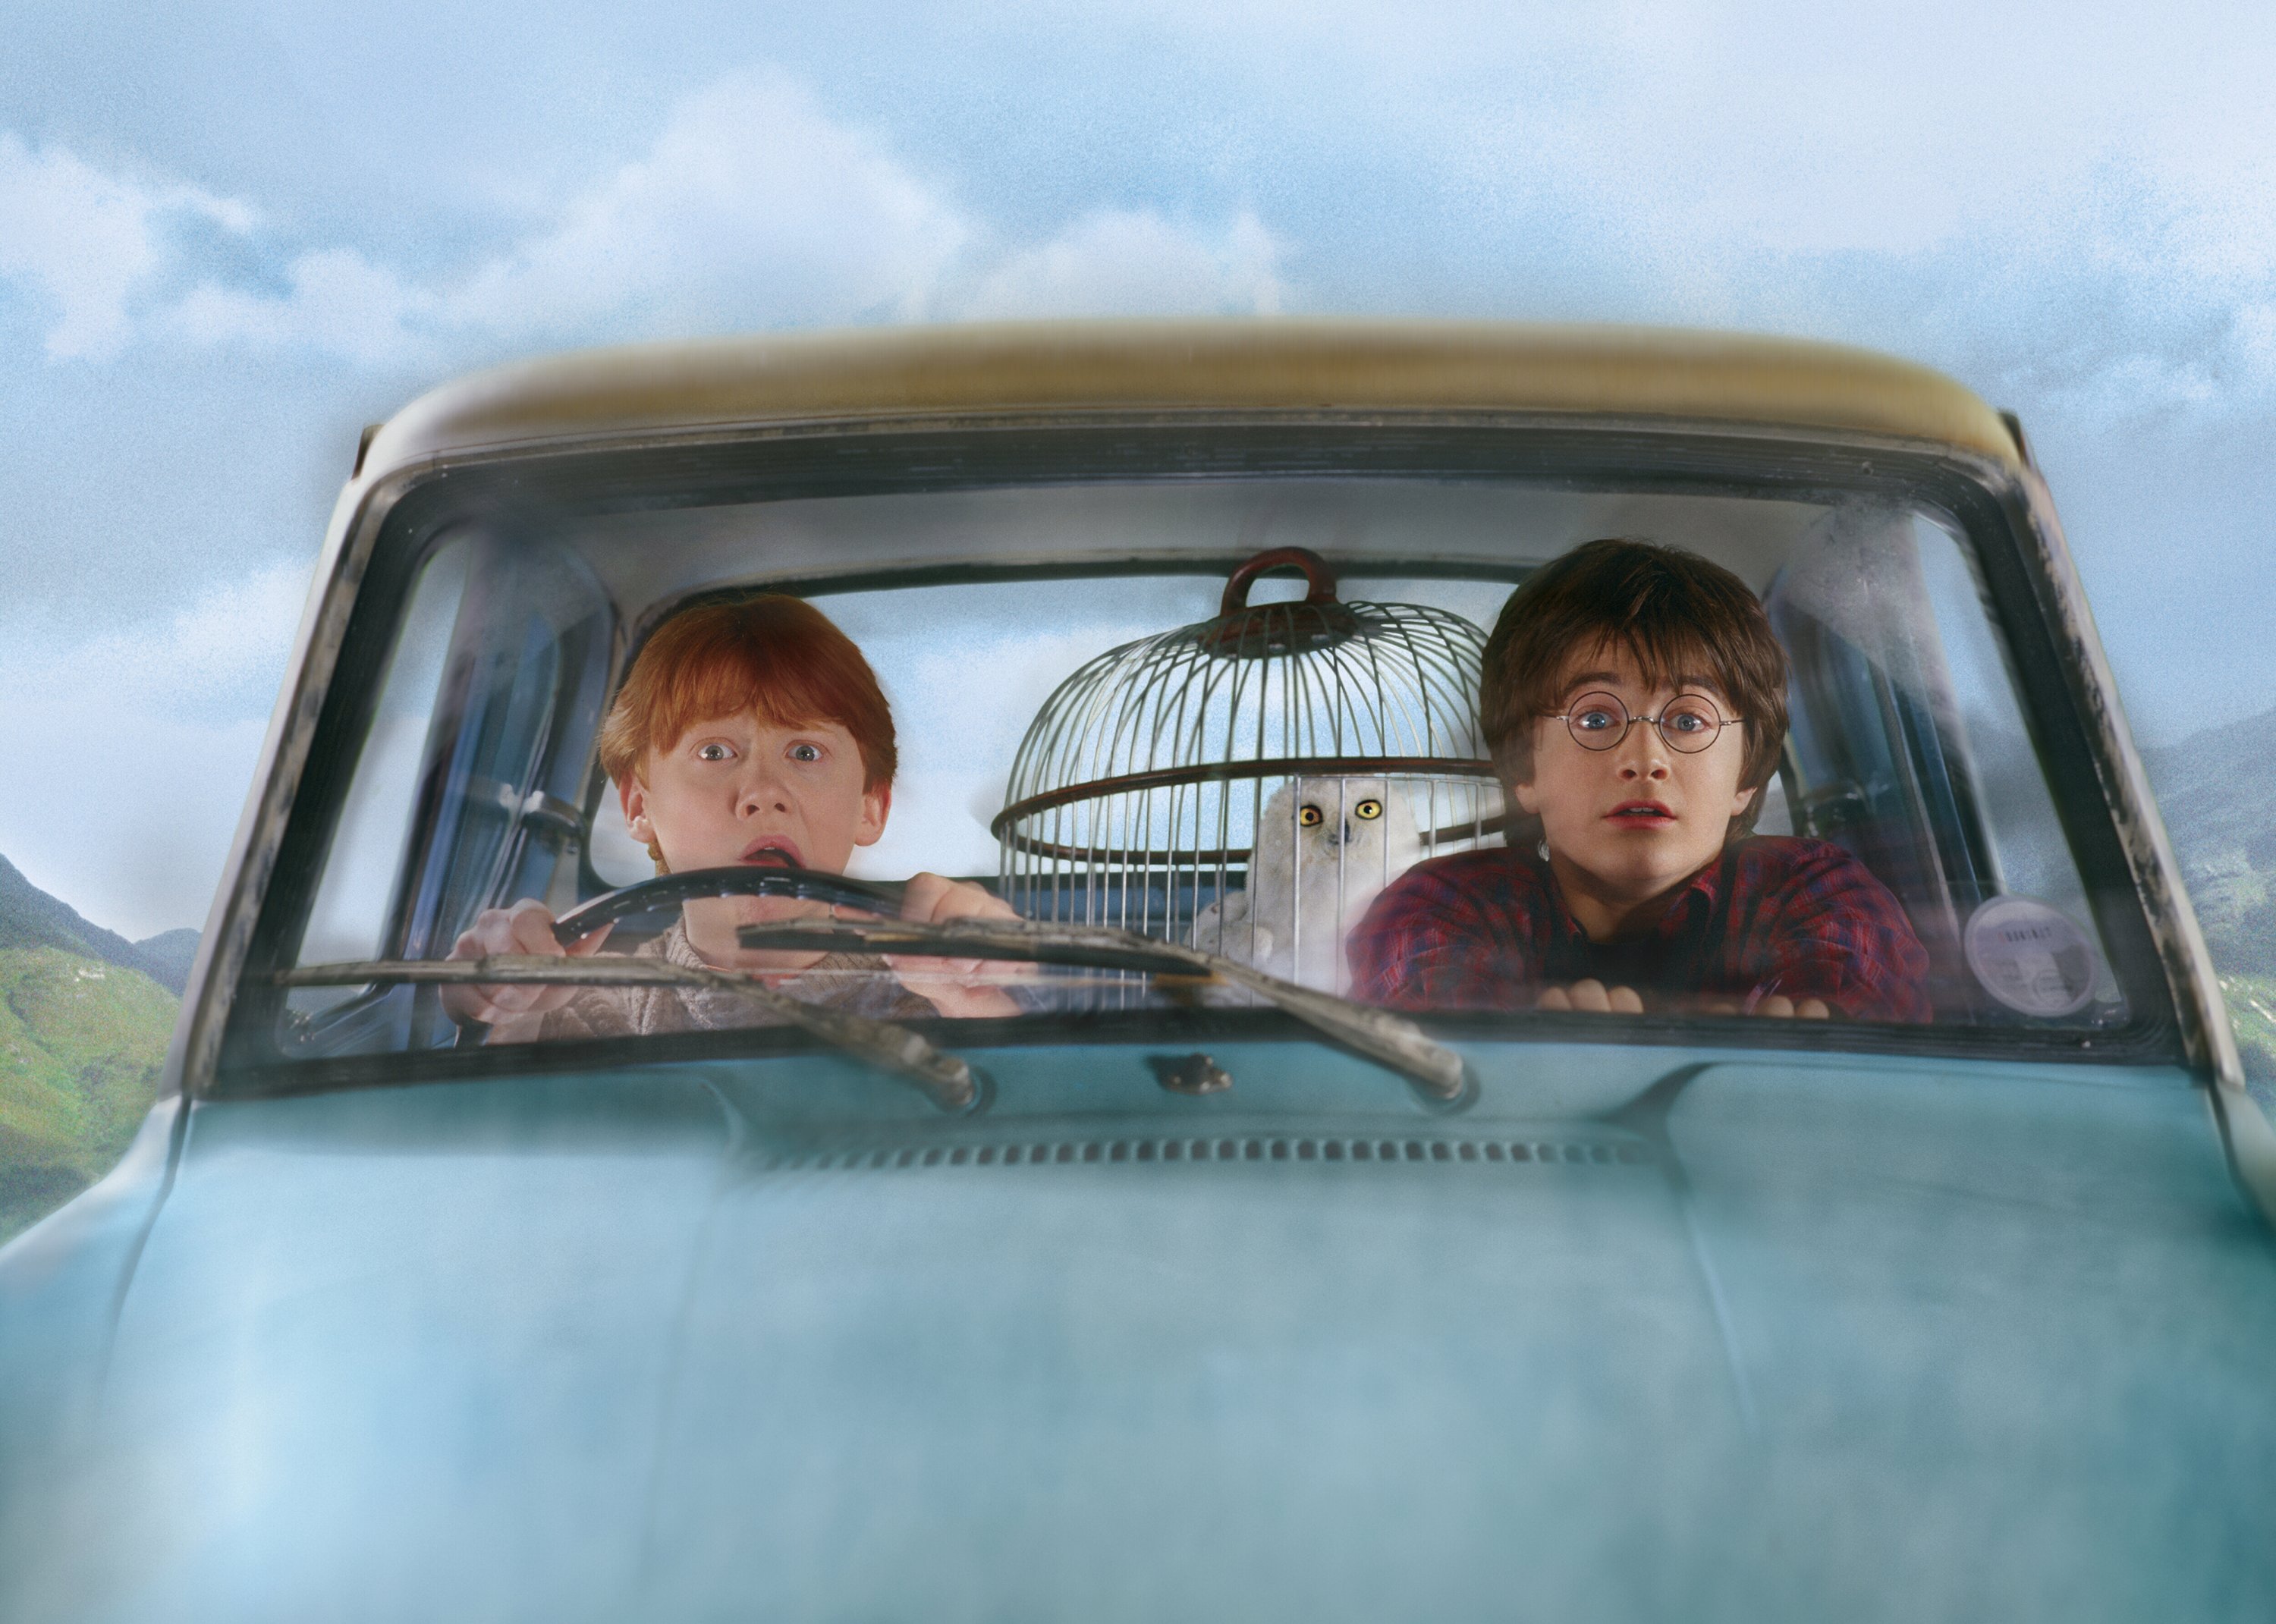  Harry Potter HQ Background Images